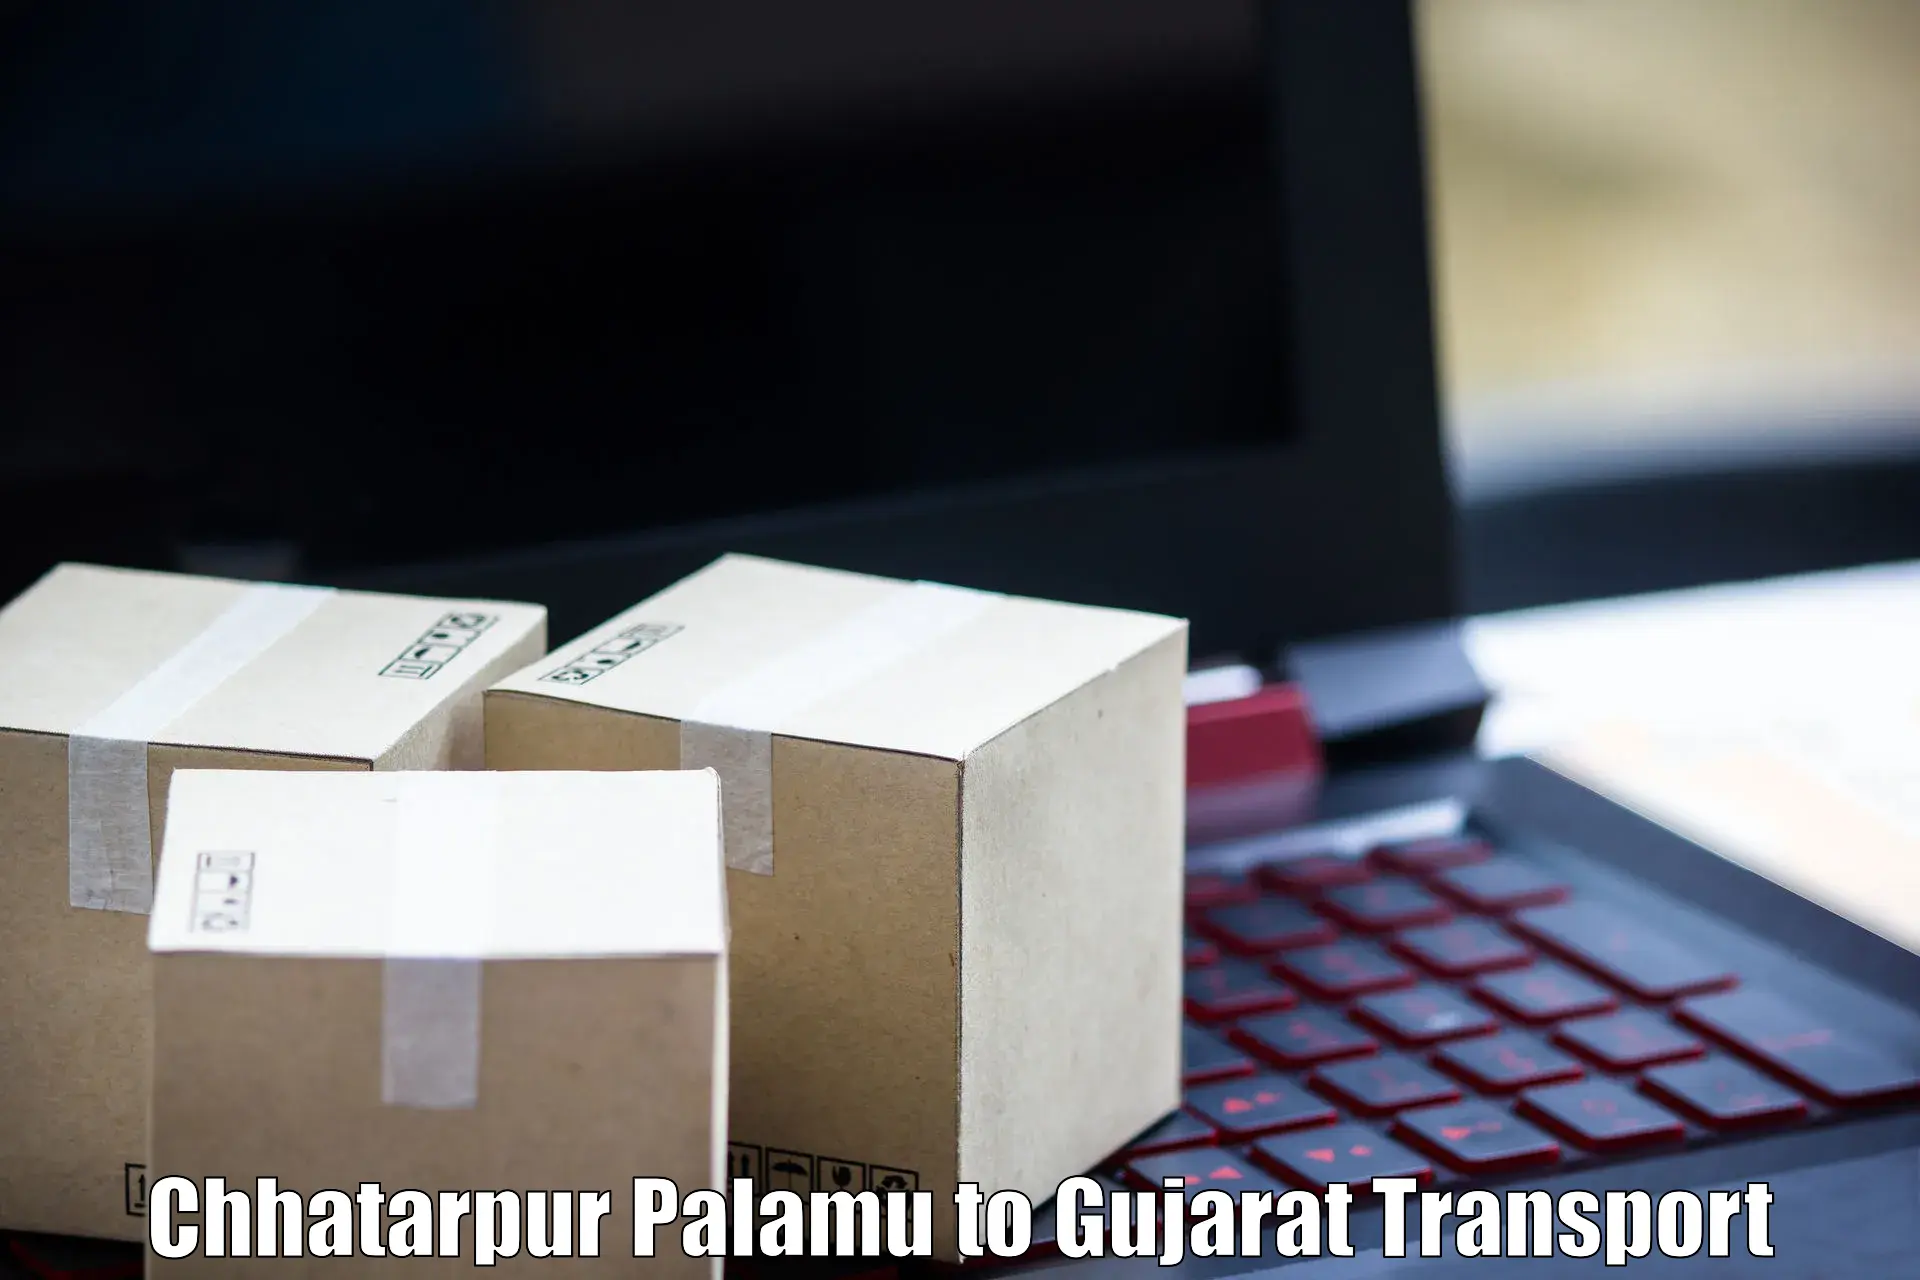 Pick up transport service in Chhatarpur Palamu to Gujarat